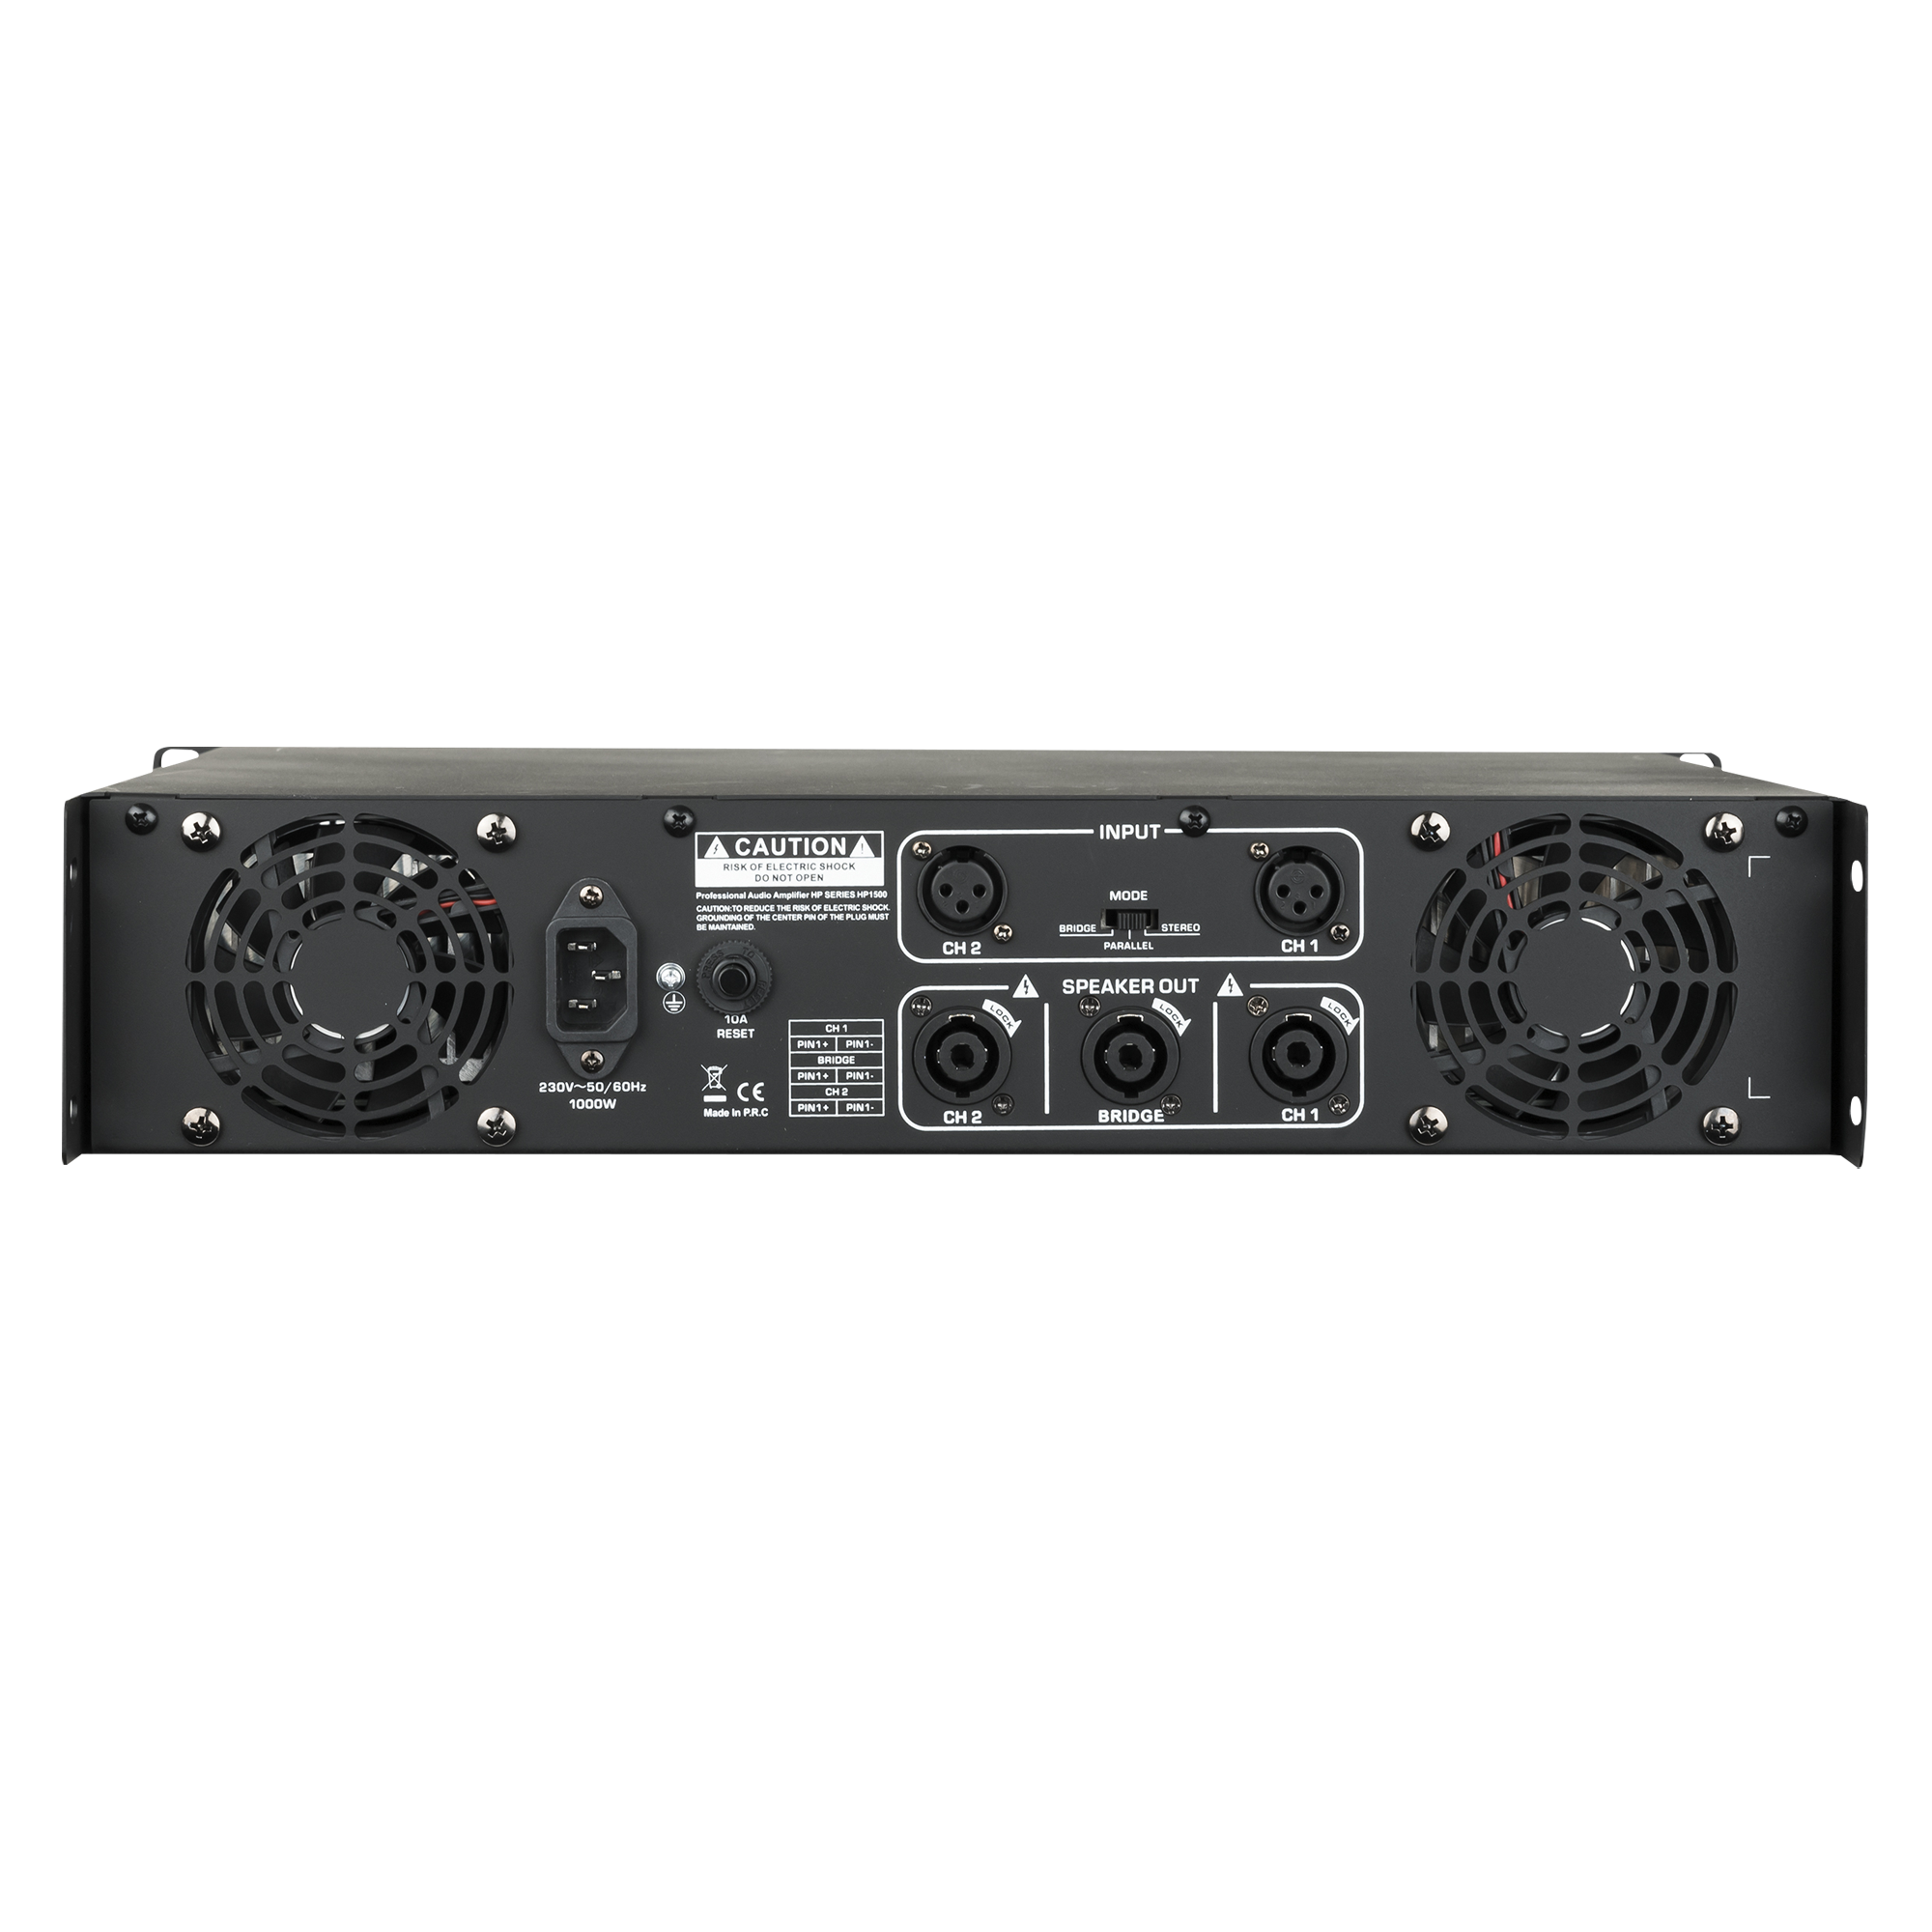 DAP HP-1500 2x 750 W Amplifier